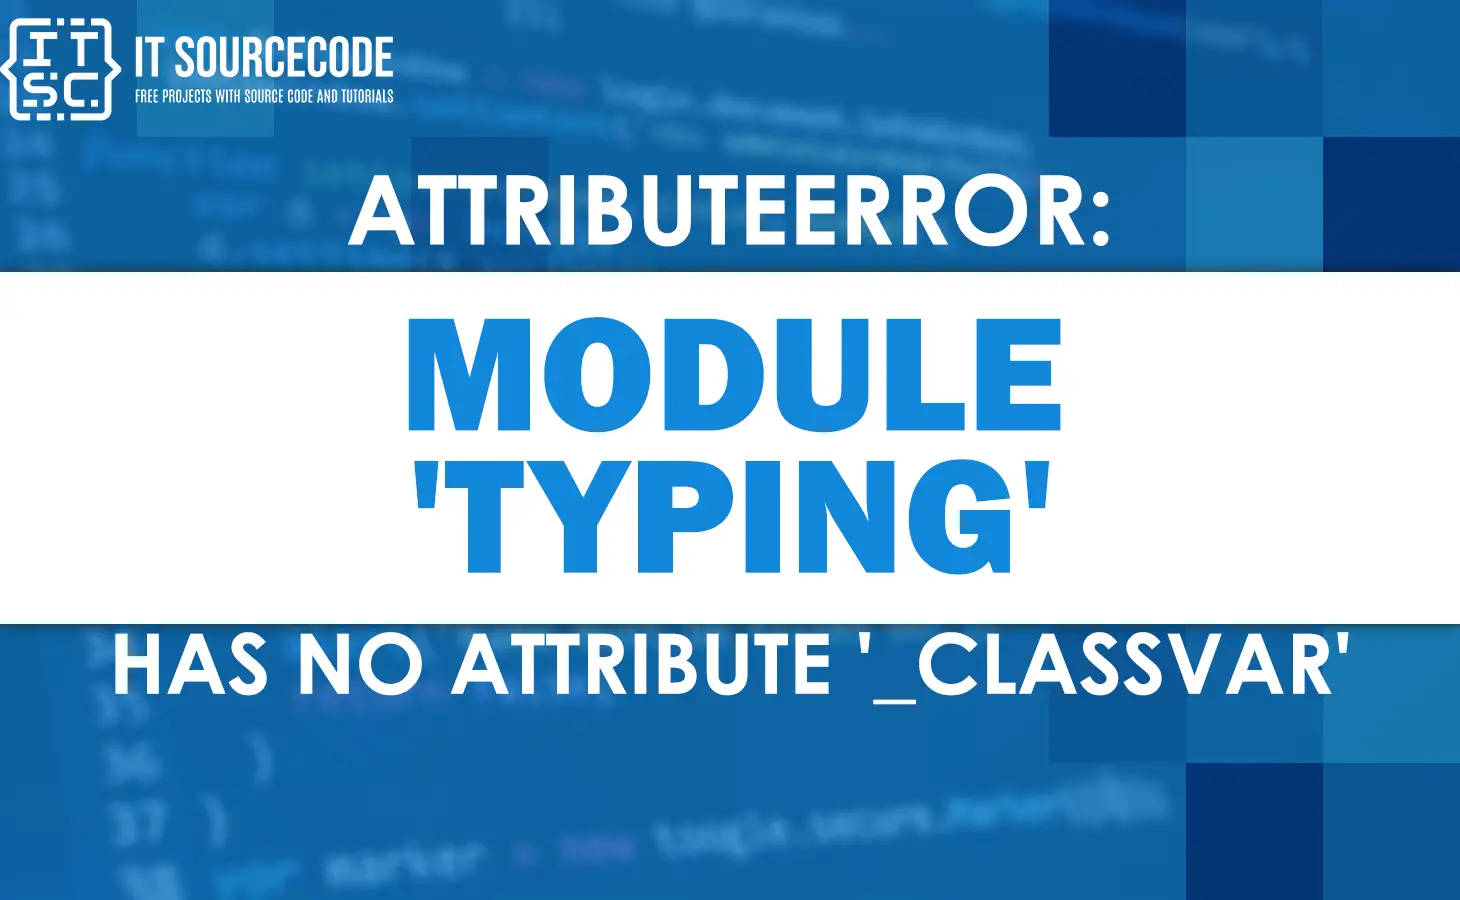 Attributeerror: module 'typing' has no attribute '_classvar'